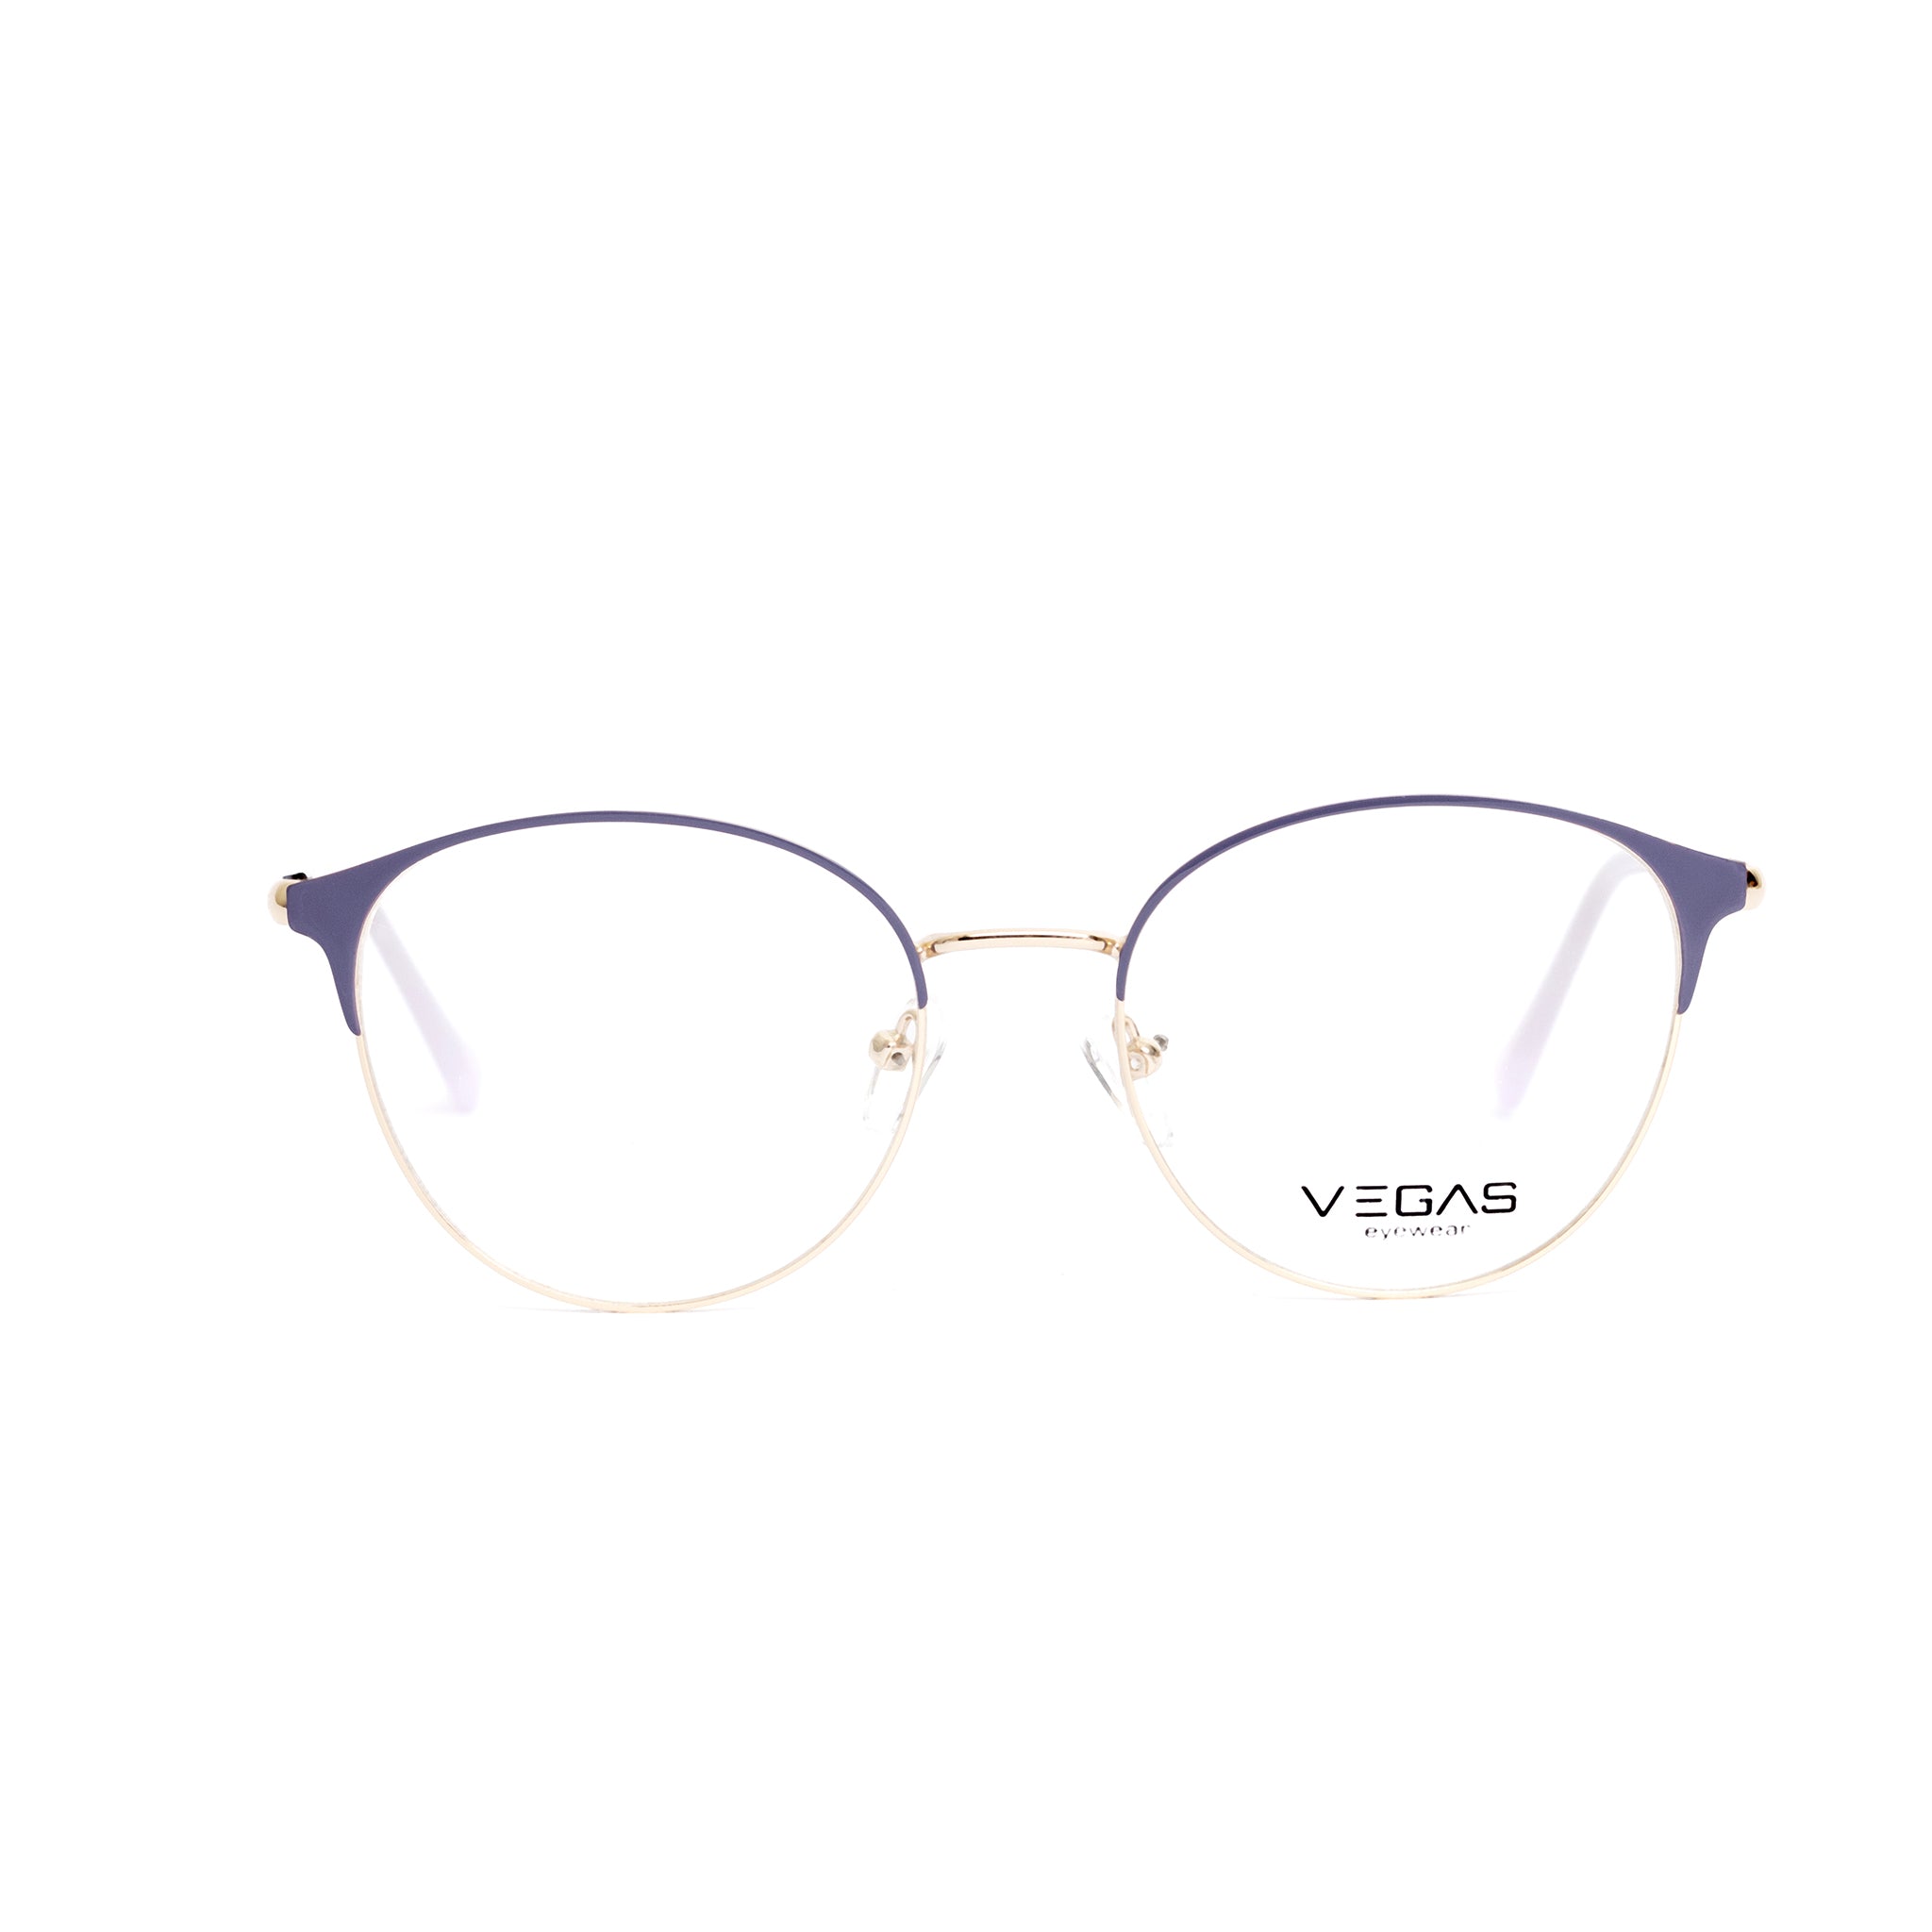 VEGAS LE6185z - COC Eyewear